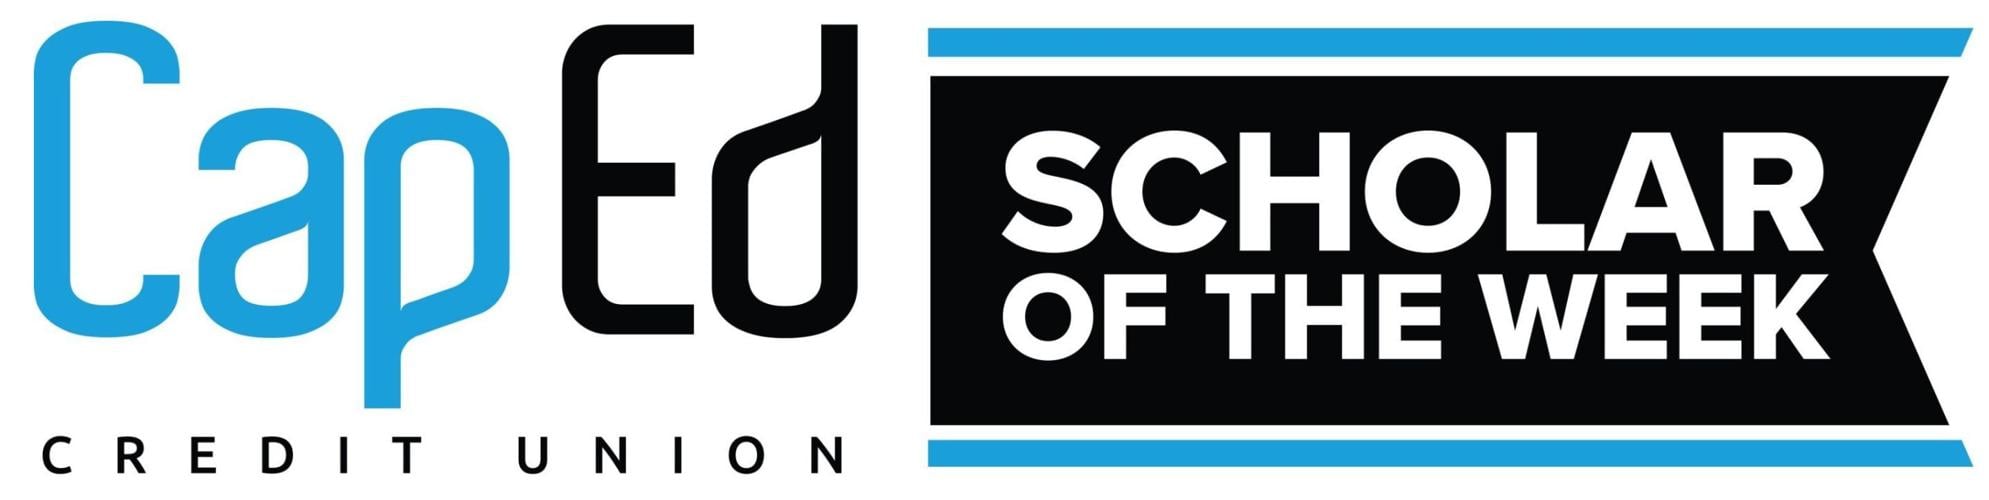 Cap Ed Scholar logo